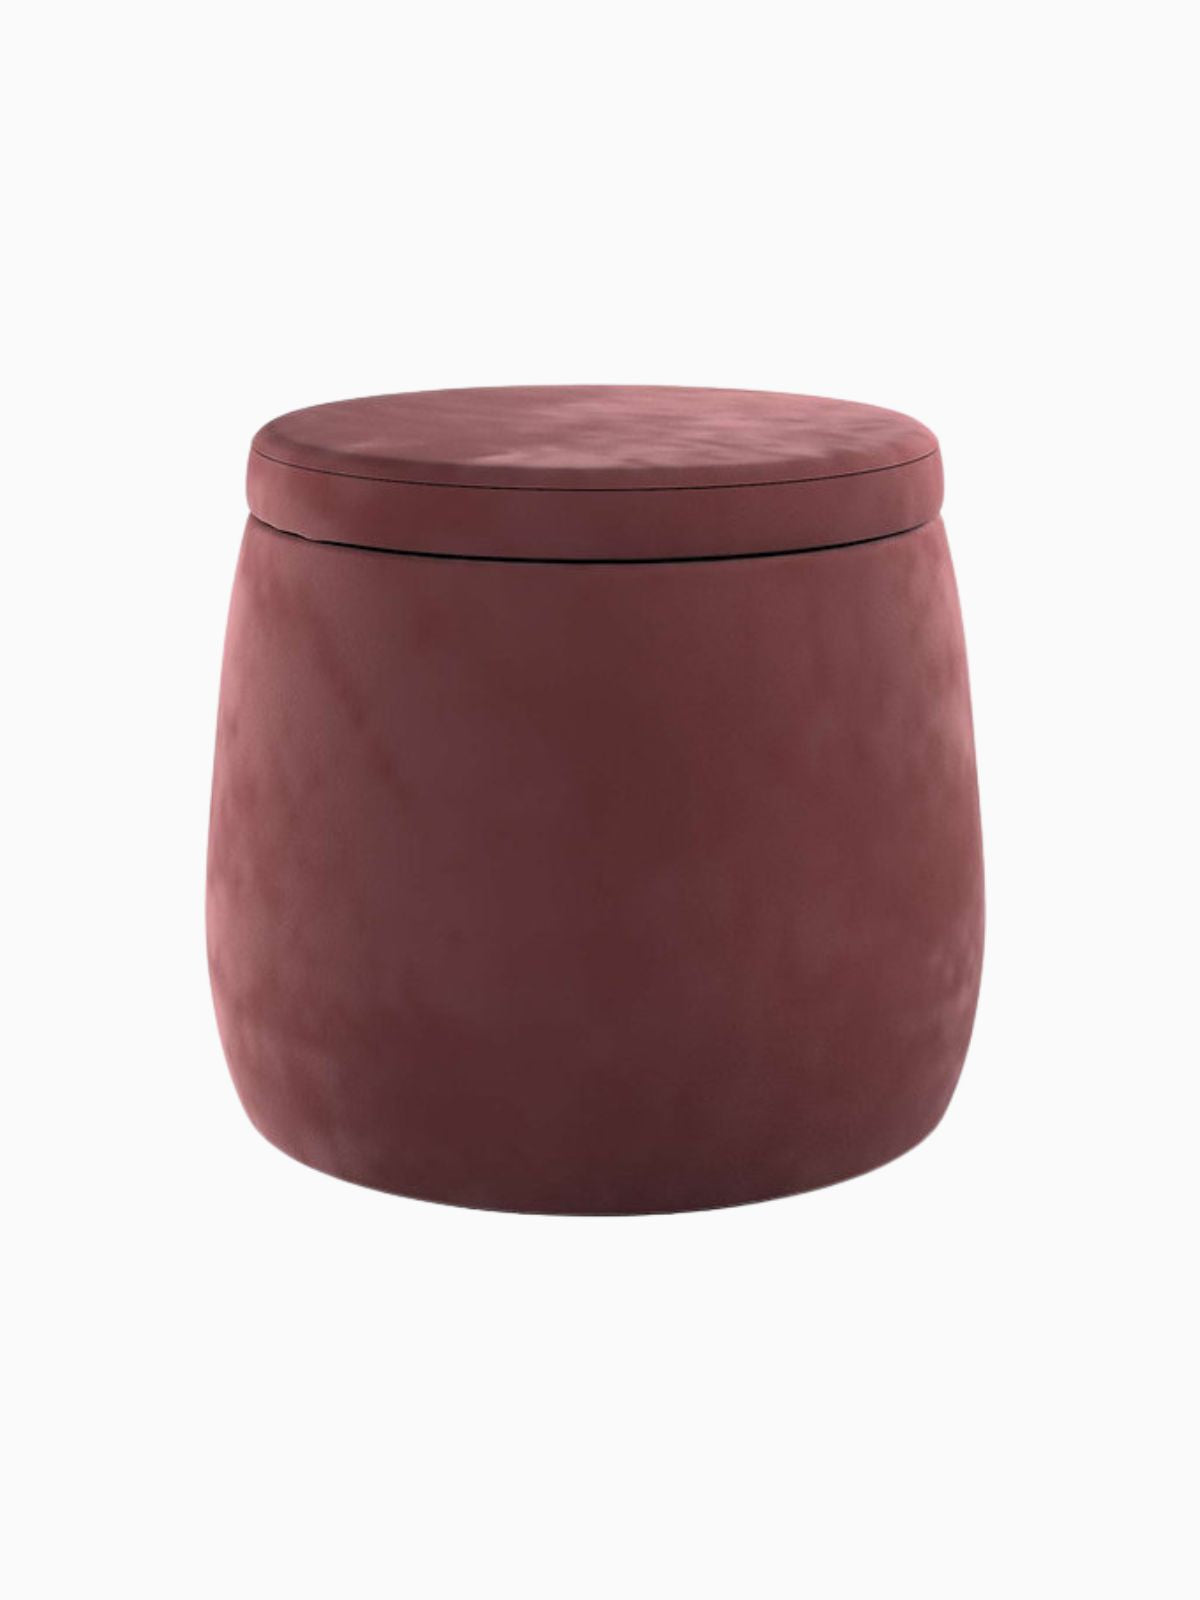 Pouf contenitore Candy Jar in velluto, colore bordeaux 40x40 cm.-1